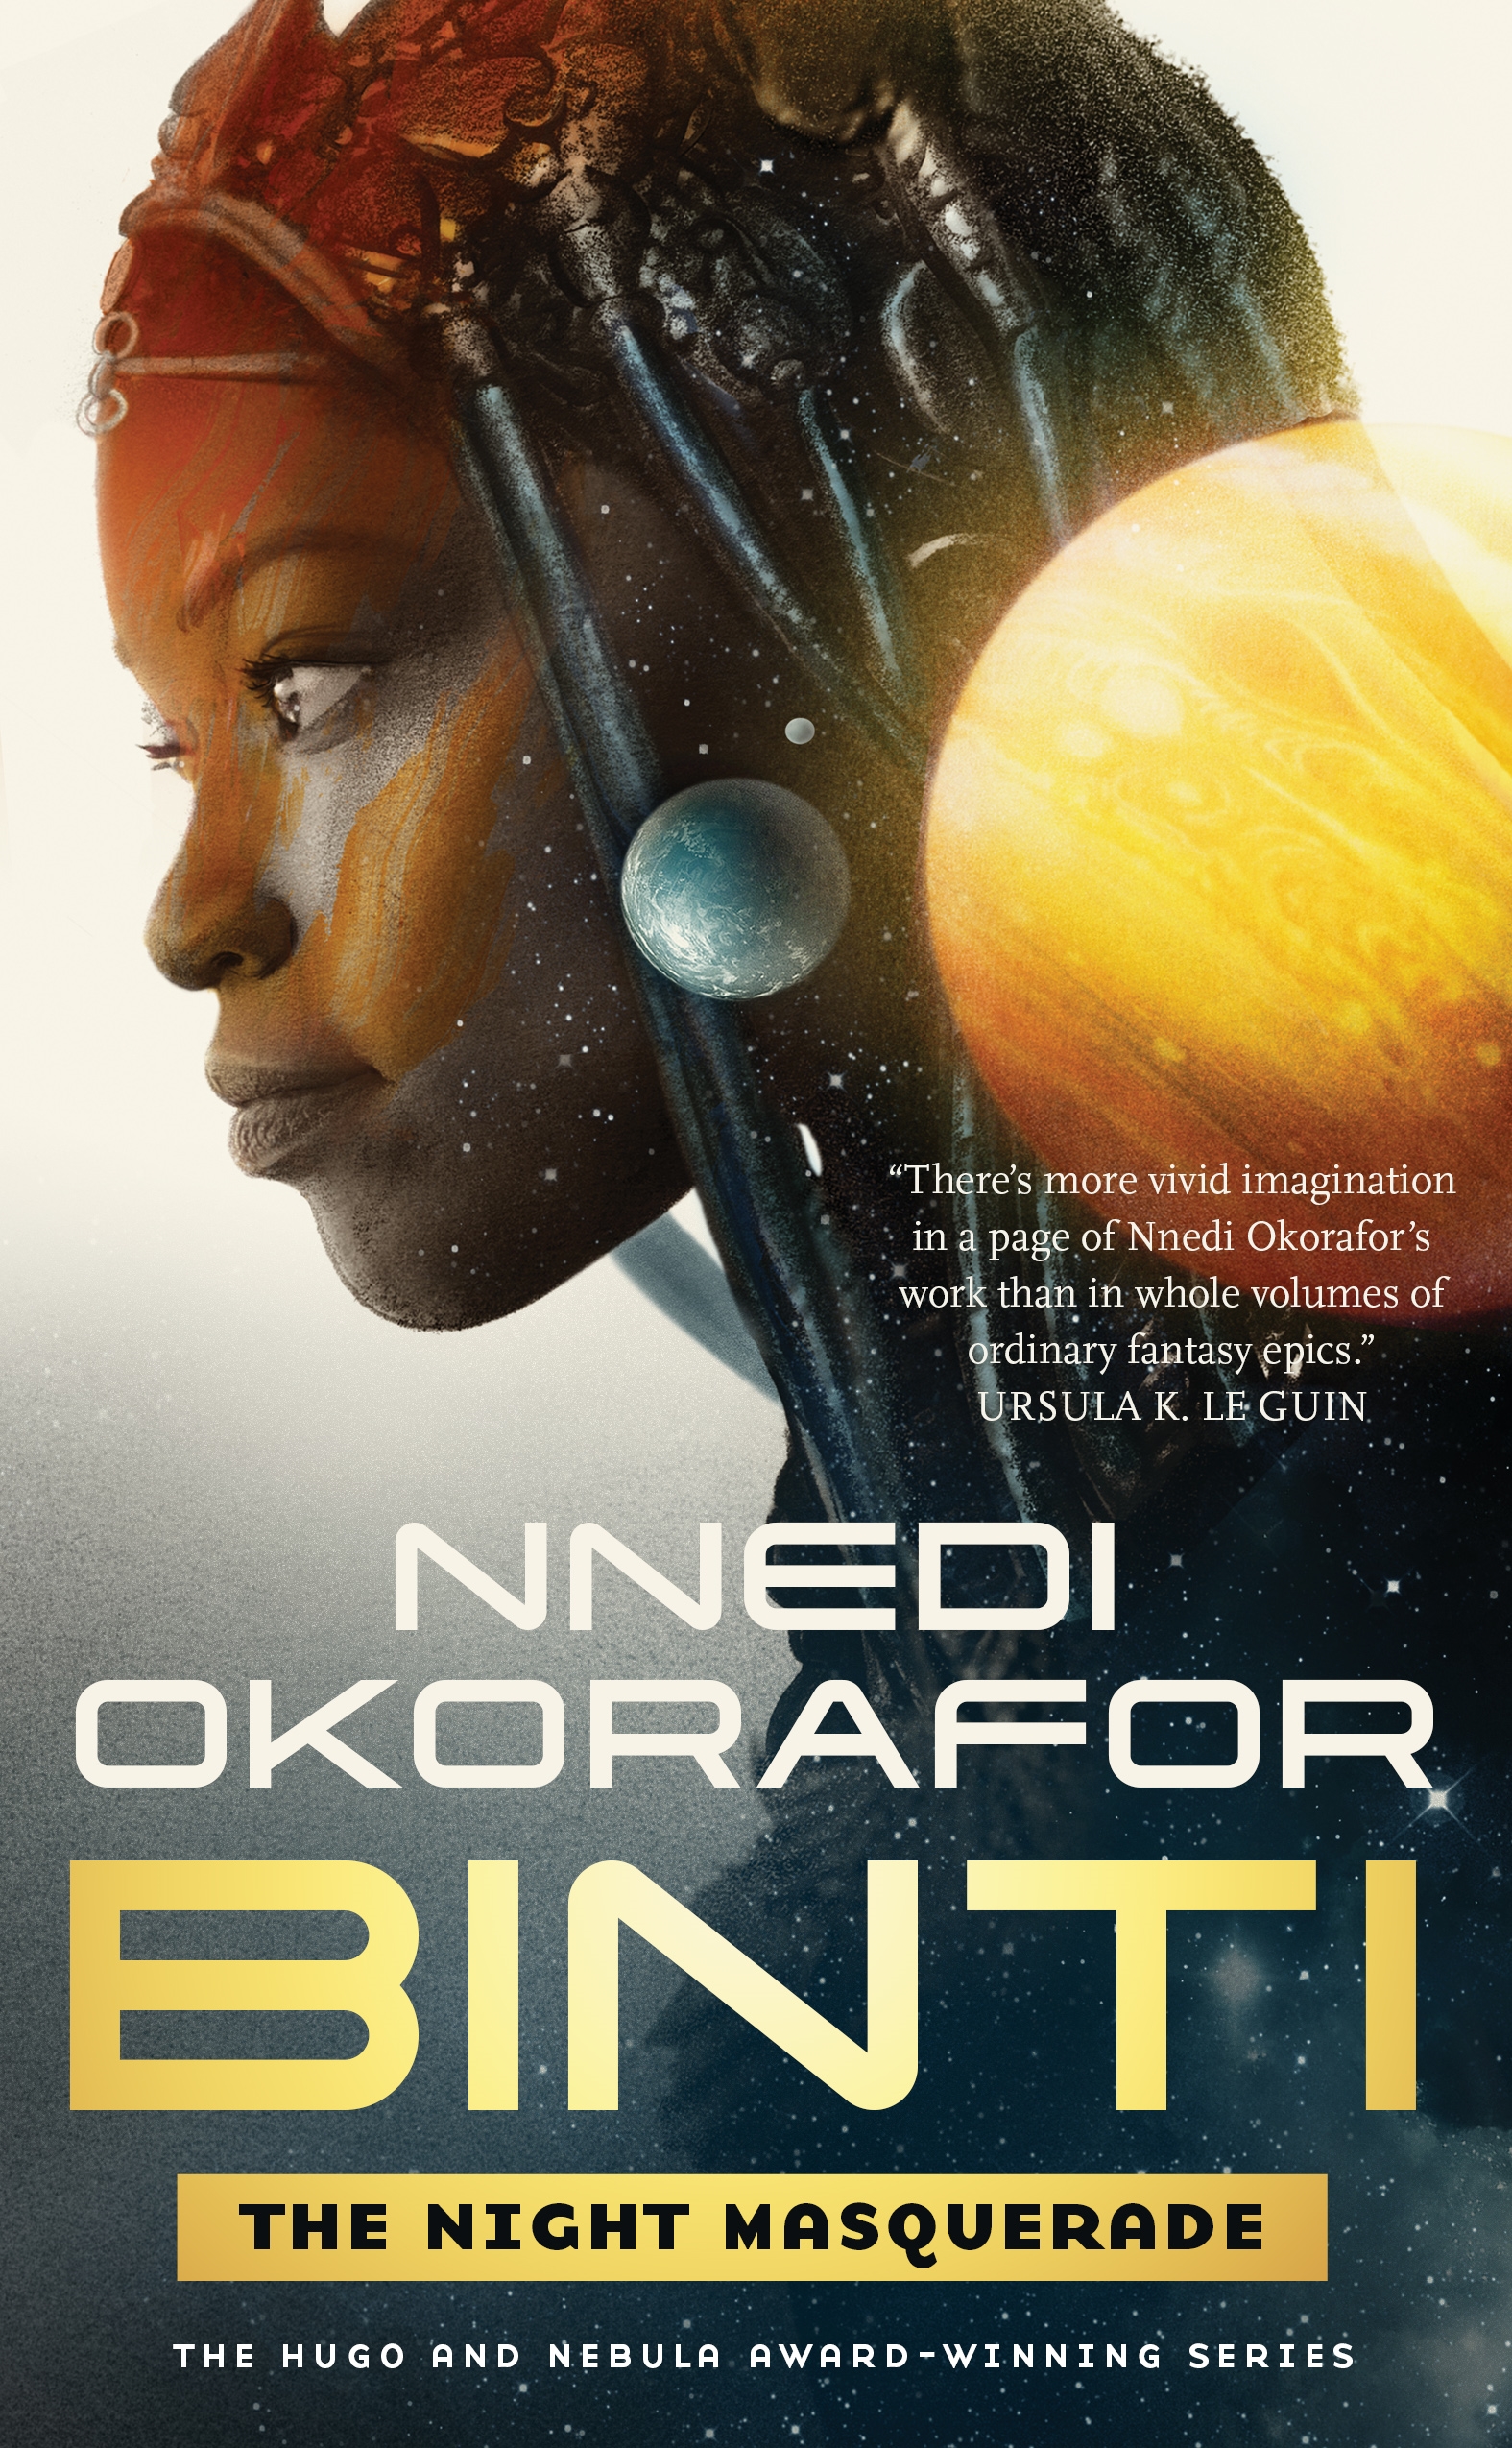 Binti: The Night Masquerade by Nnedi Okorafor